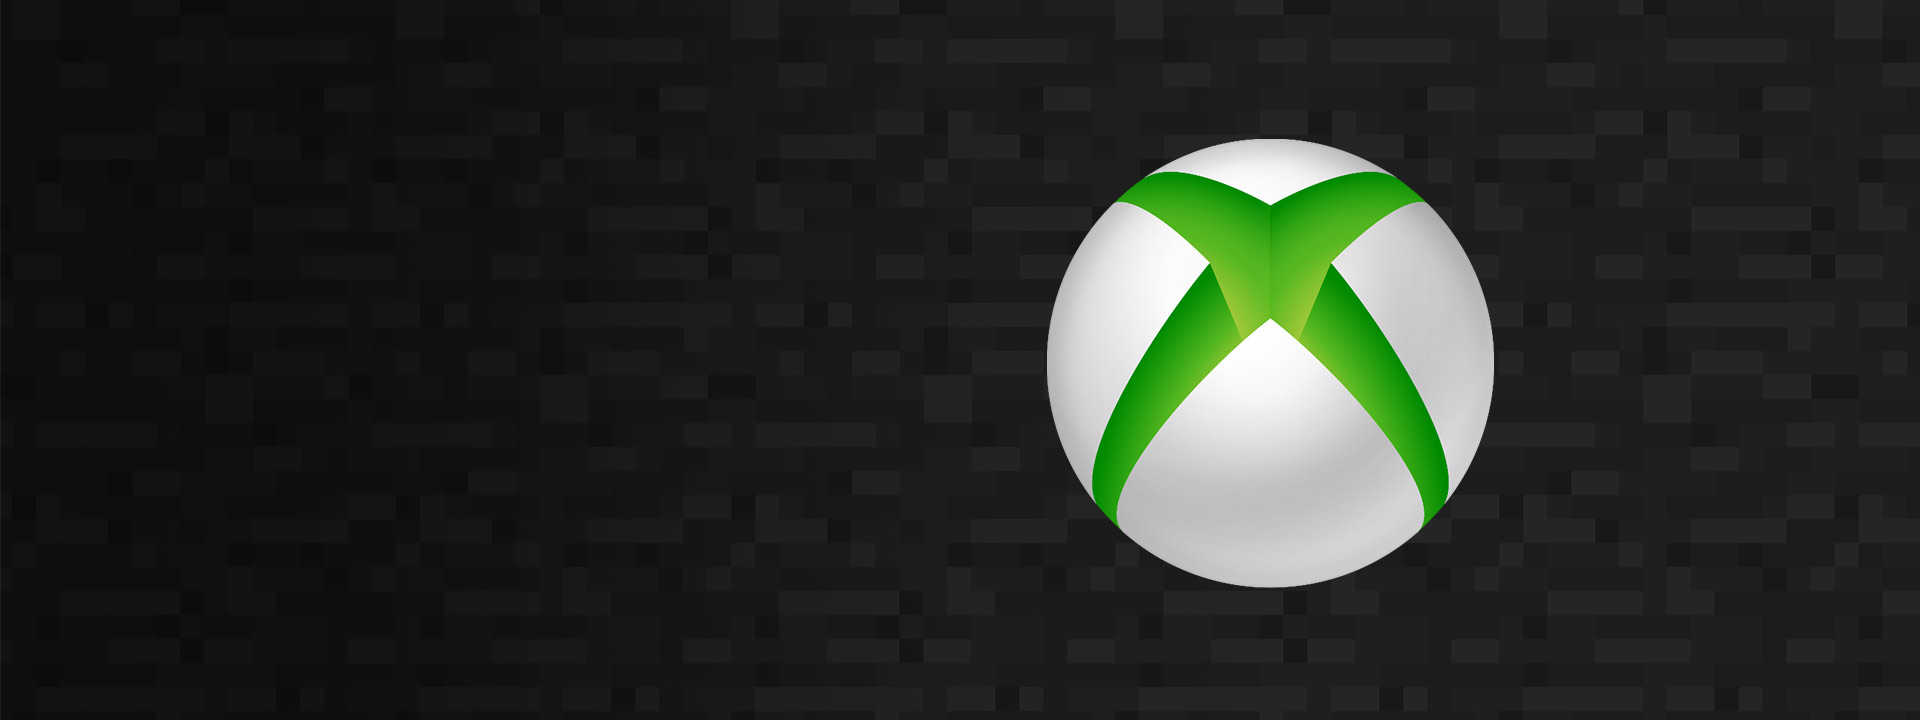 Xbox logo on a grey brick background